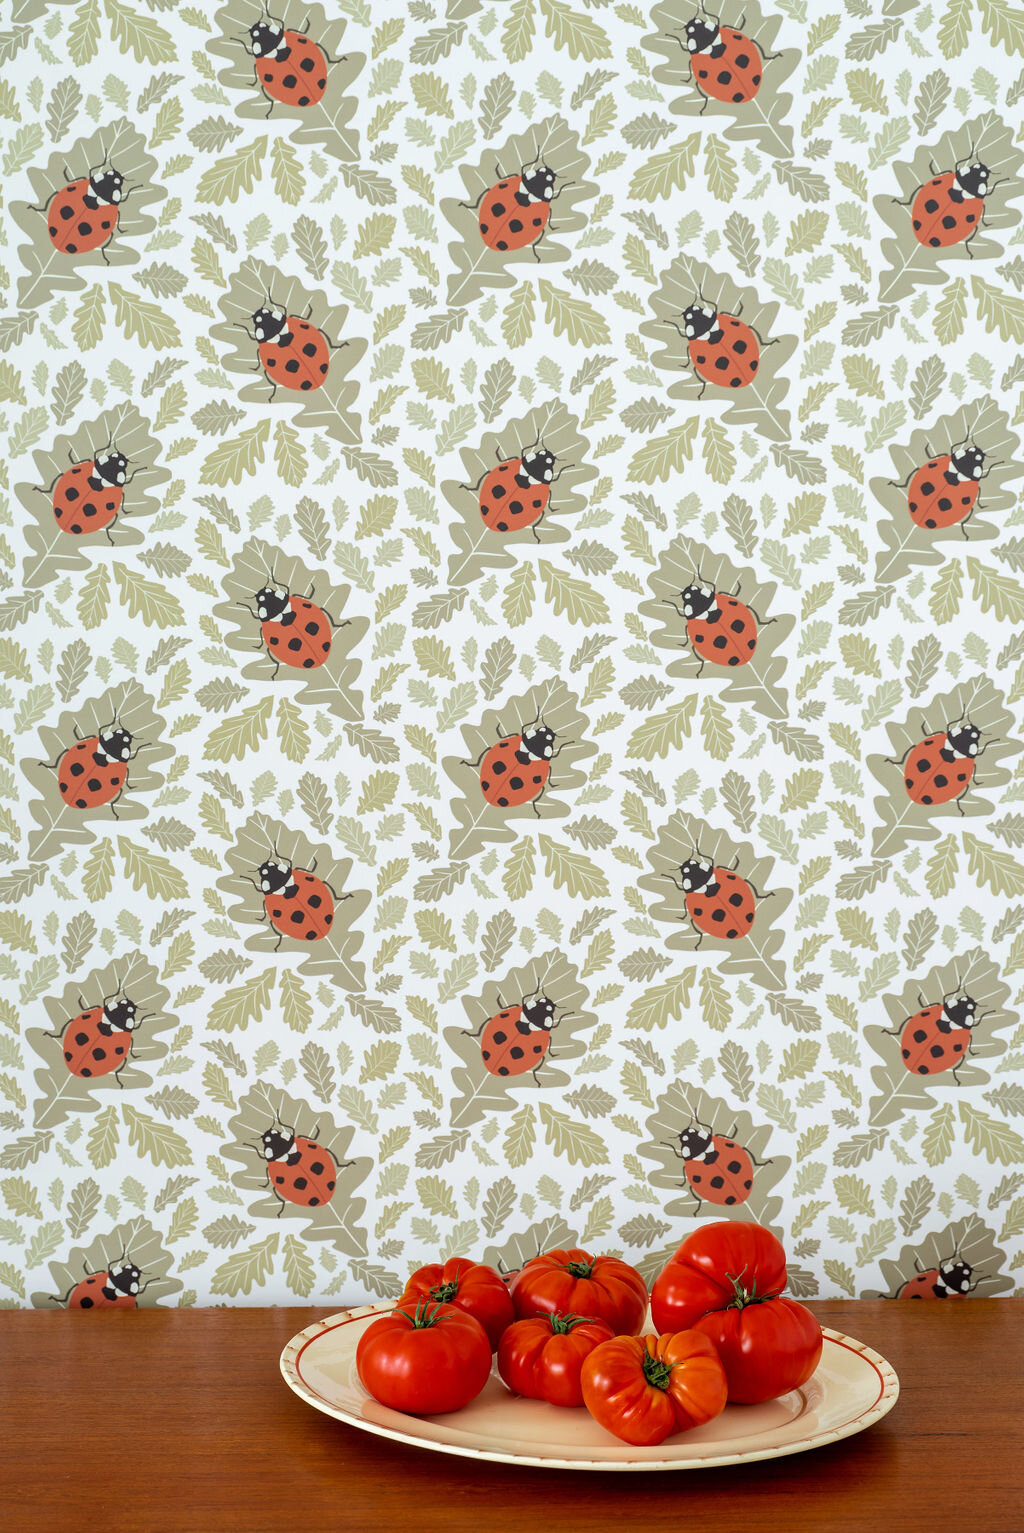 Kate Golding Ladybird wallpaper // Modern wallcoverings and interior decor.